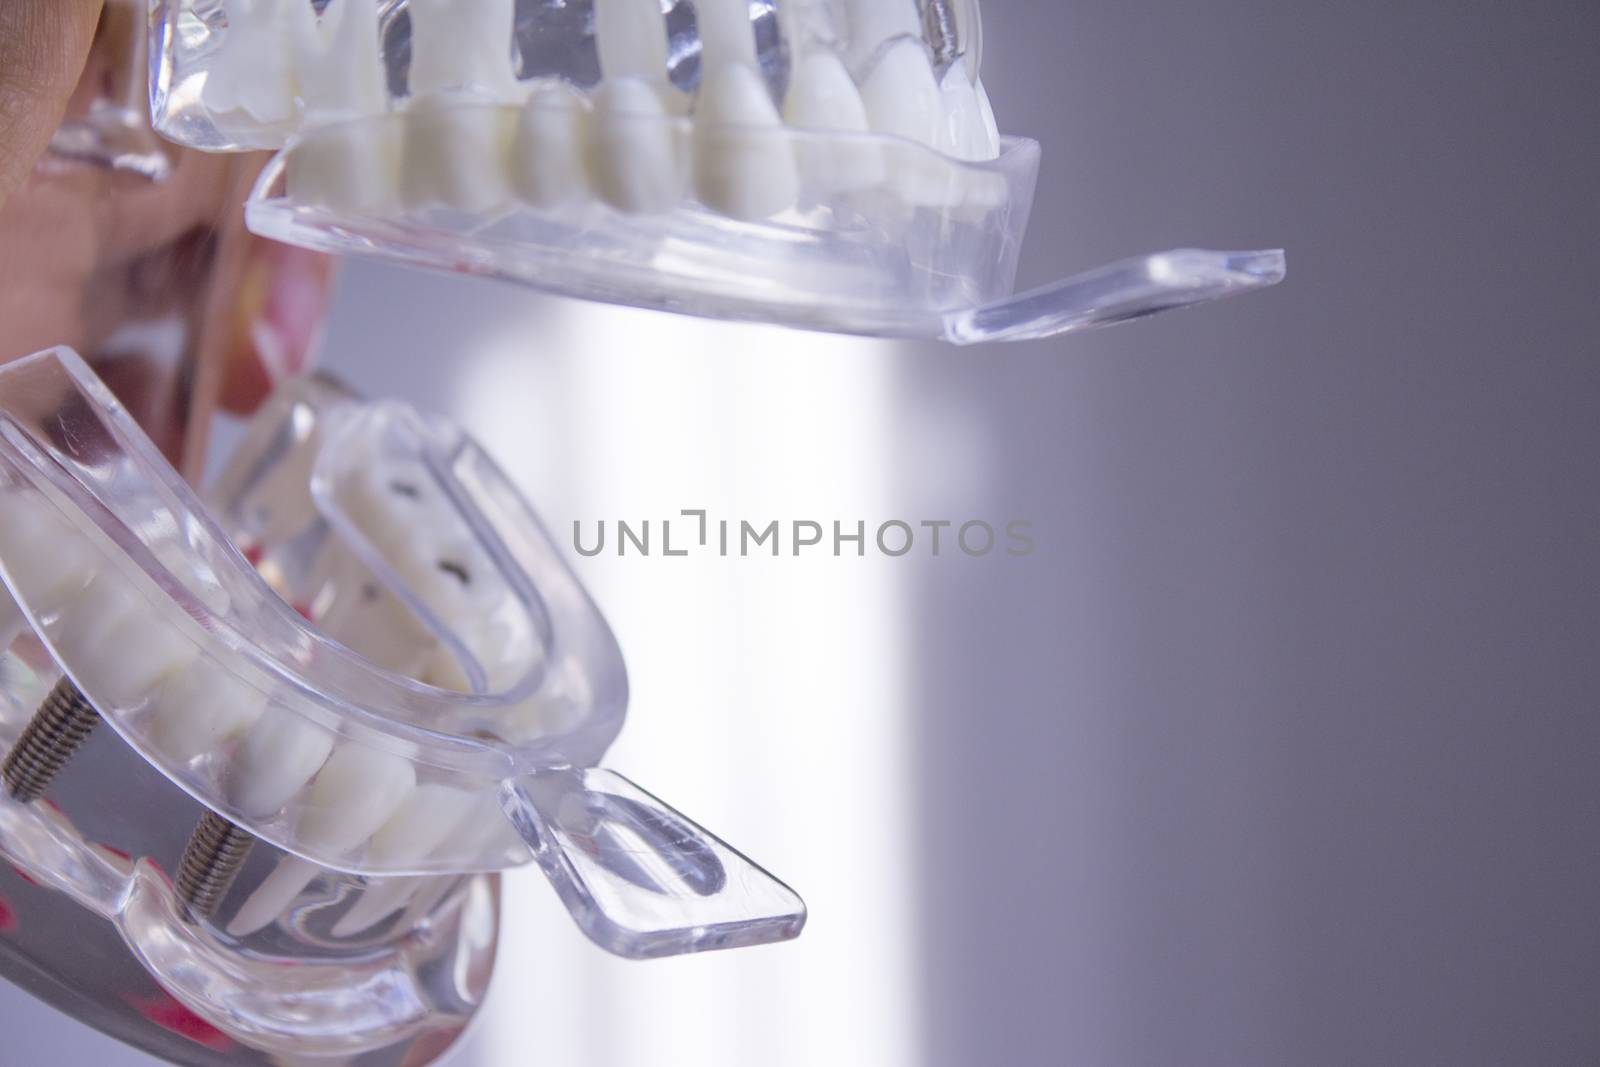 Silicone molds to make dentures inside a false mouth